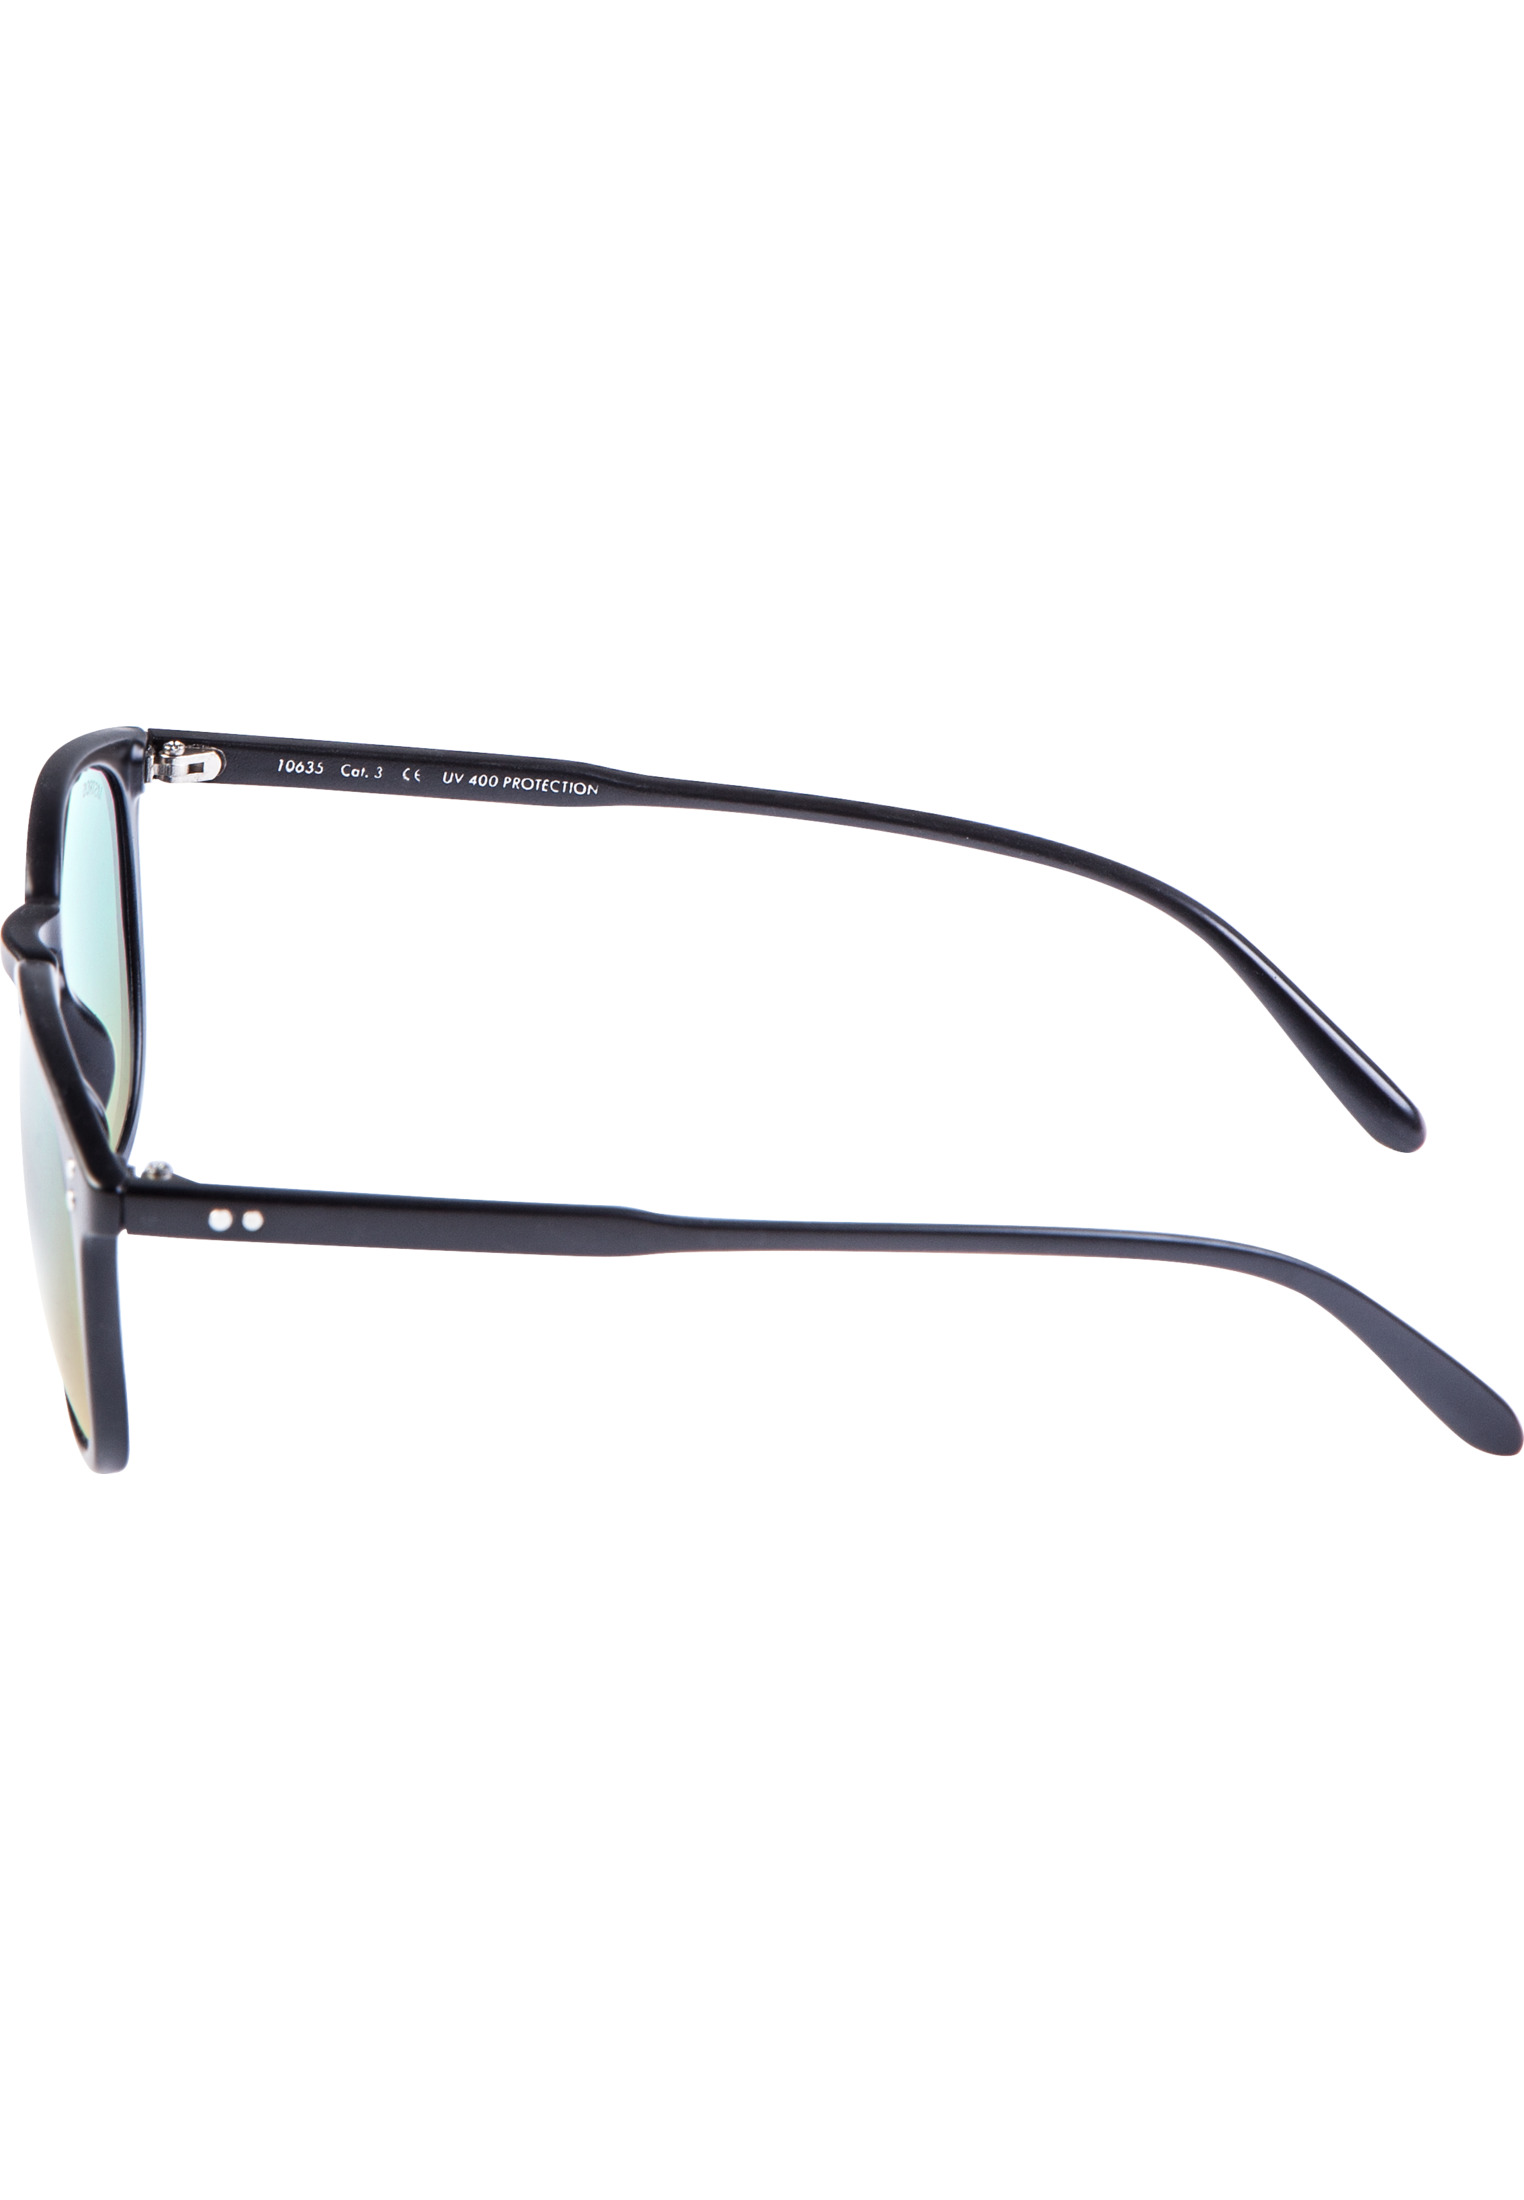 Sunglasses Arthur-10635